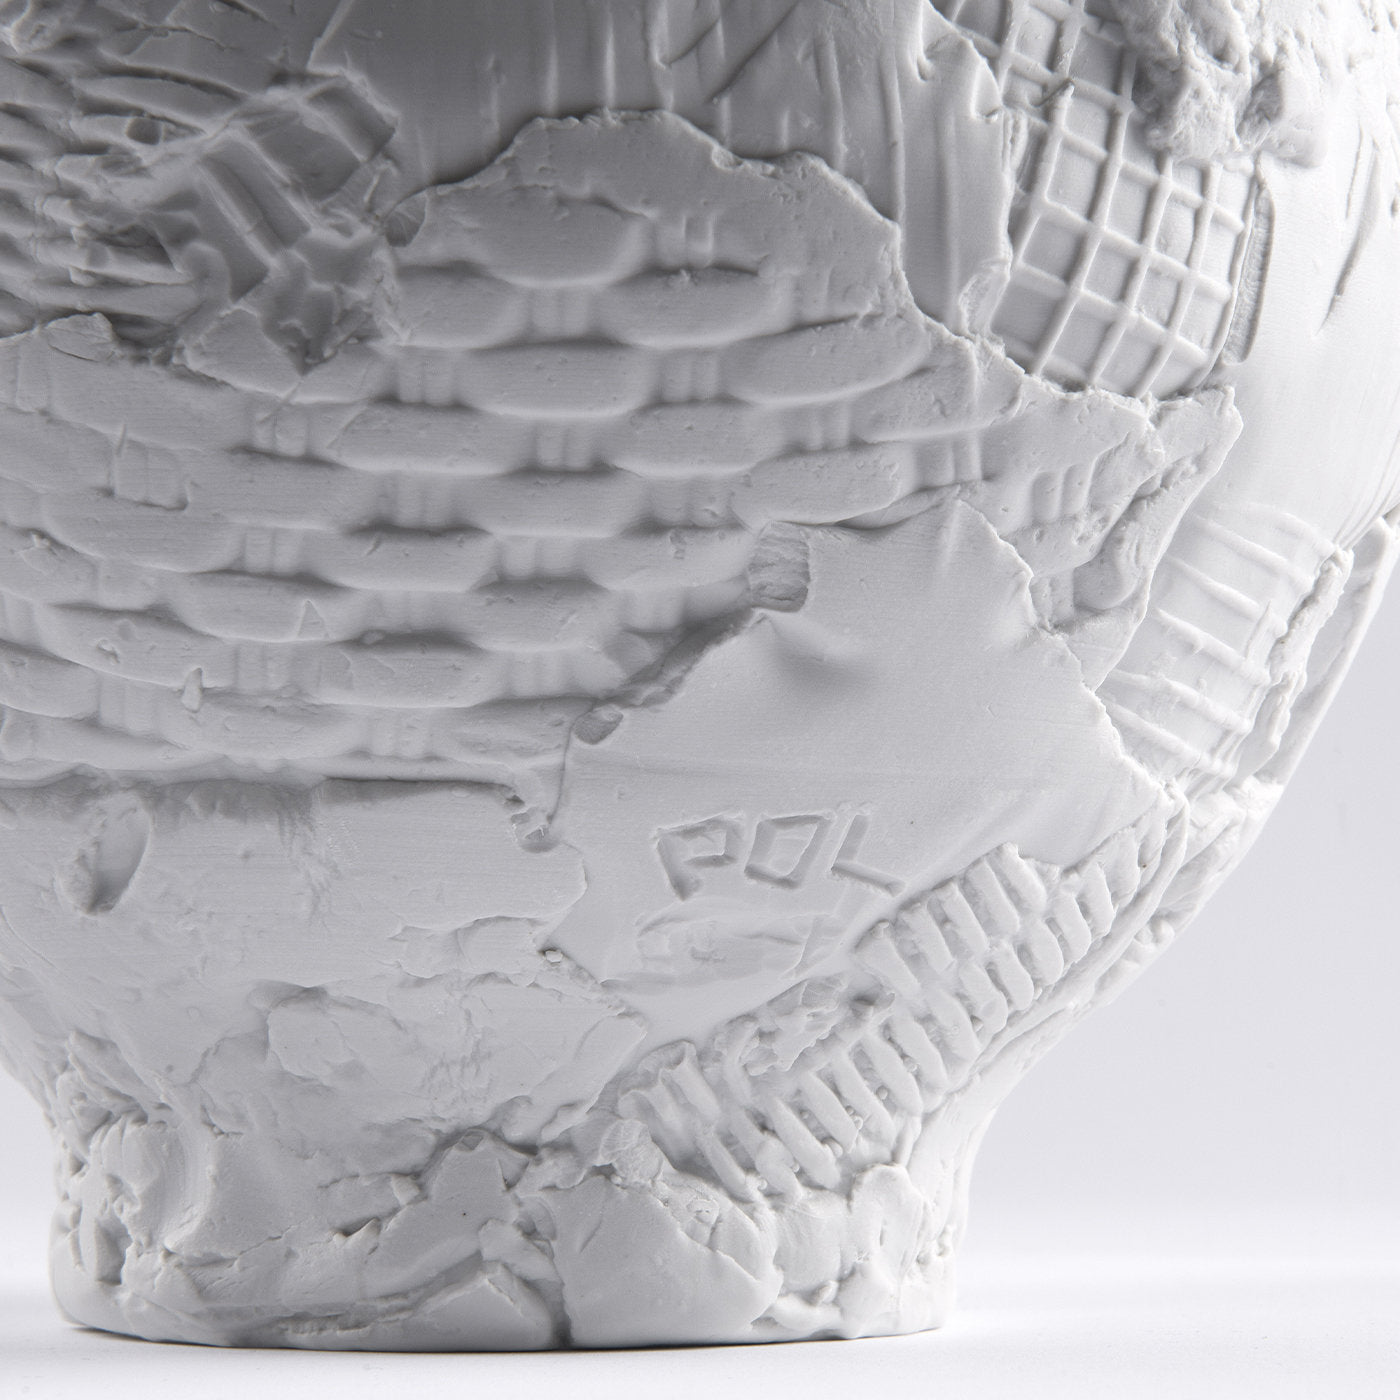 Esker Vase by Pol Polloniato - Alternative view 1